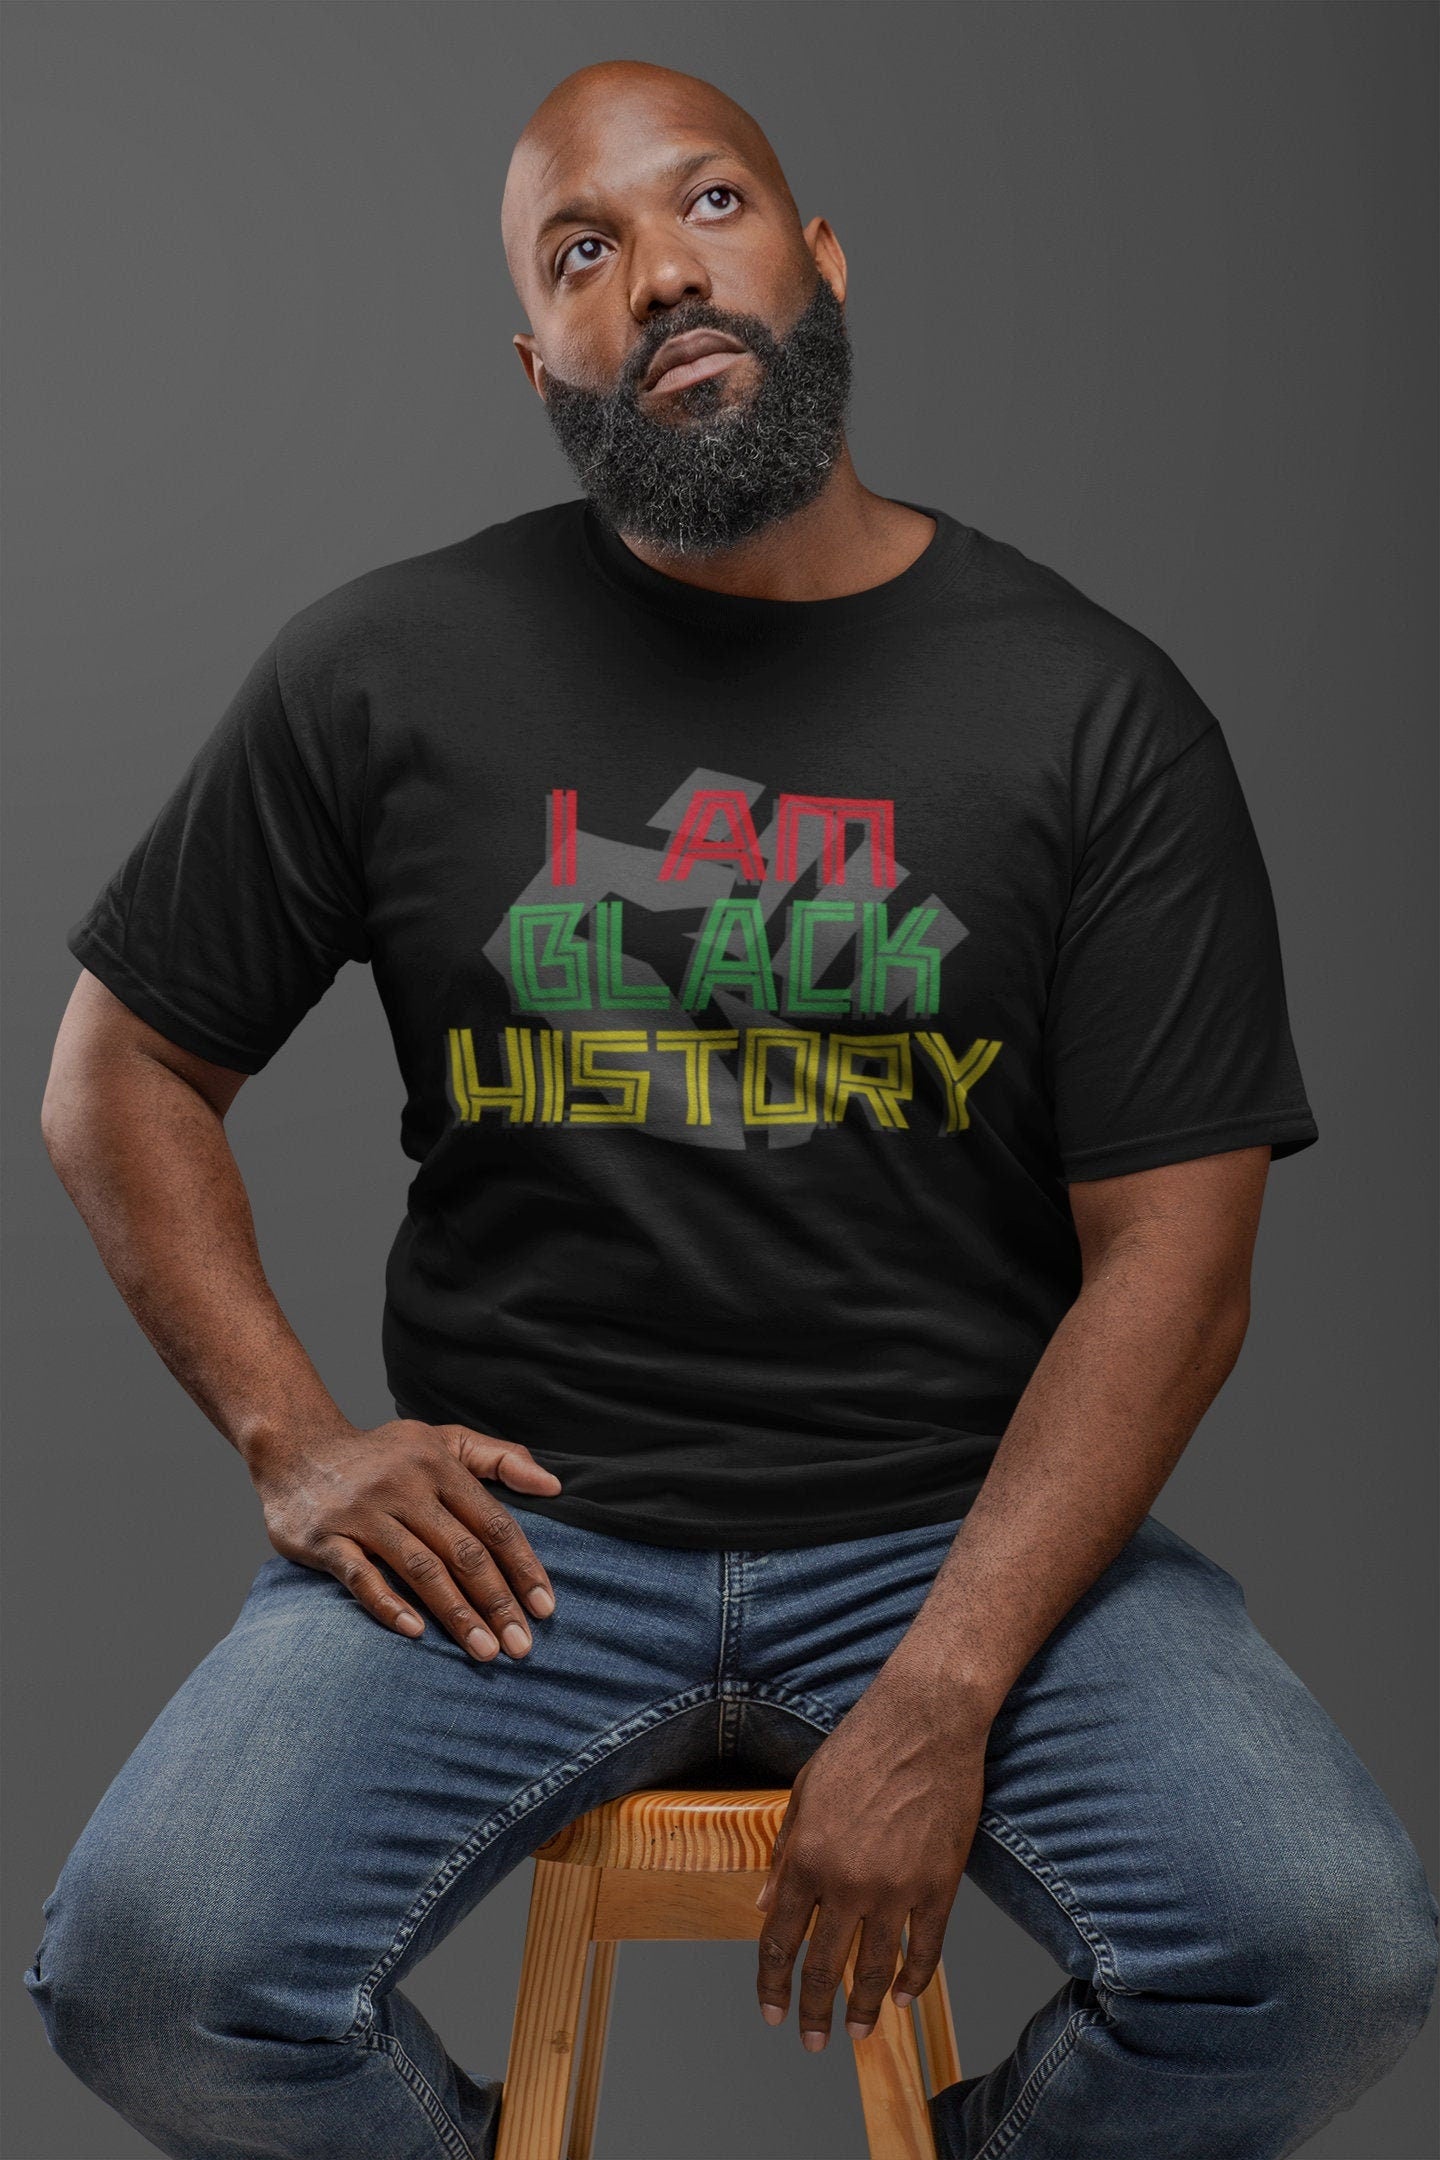 Black Lives Matter Shirt. Black History Shirt, Equality Shirt, Civil Rights Shirt, Expression Tee, Black Power Shirt